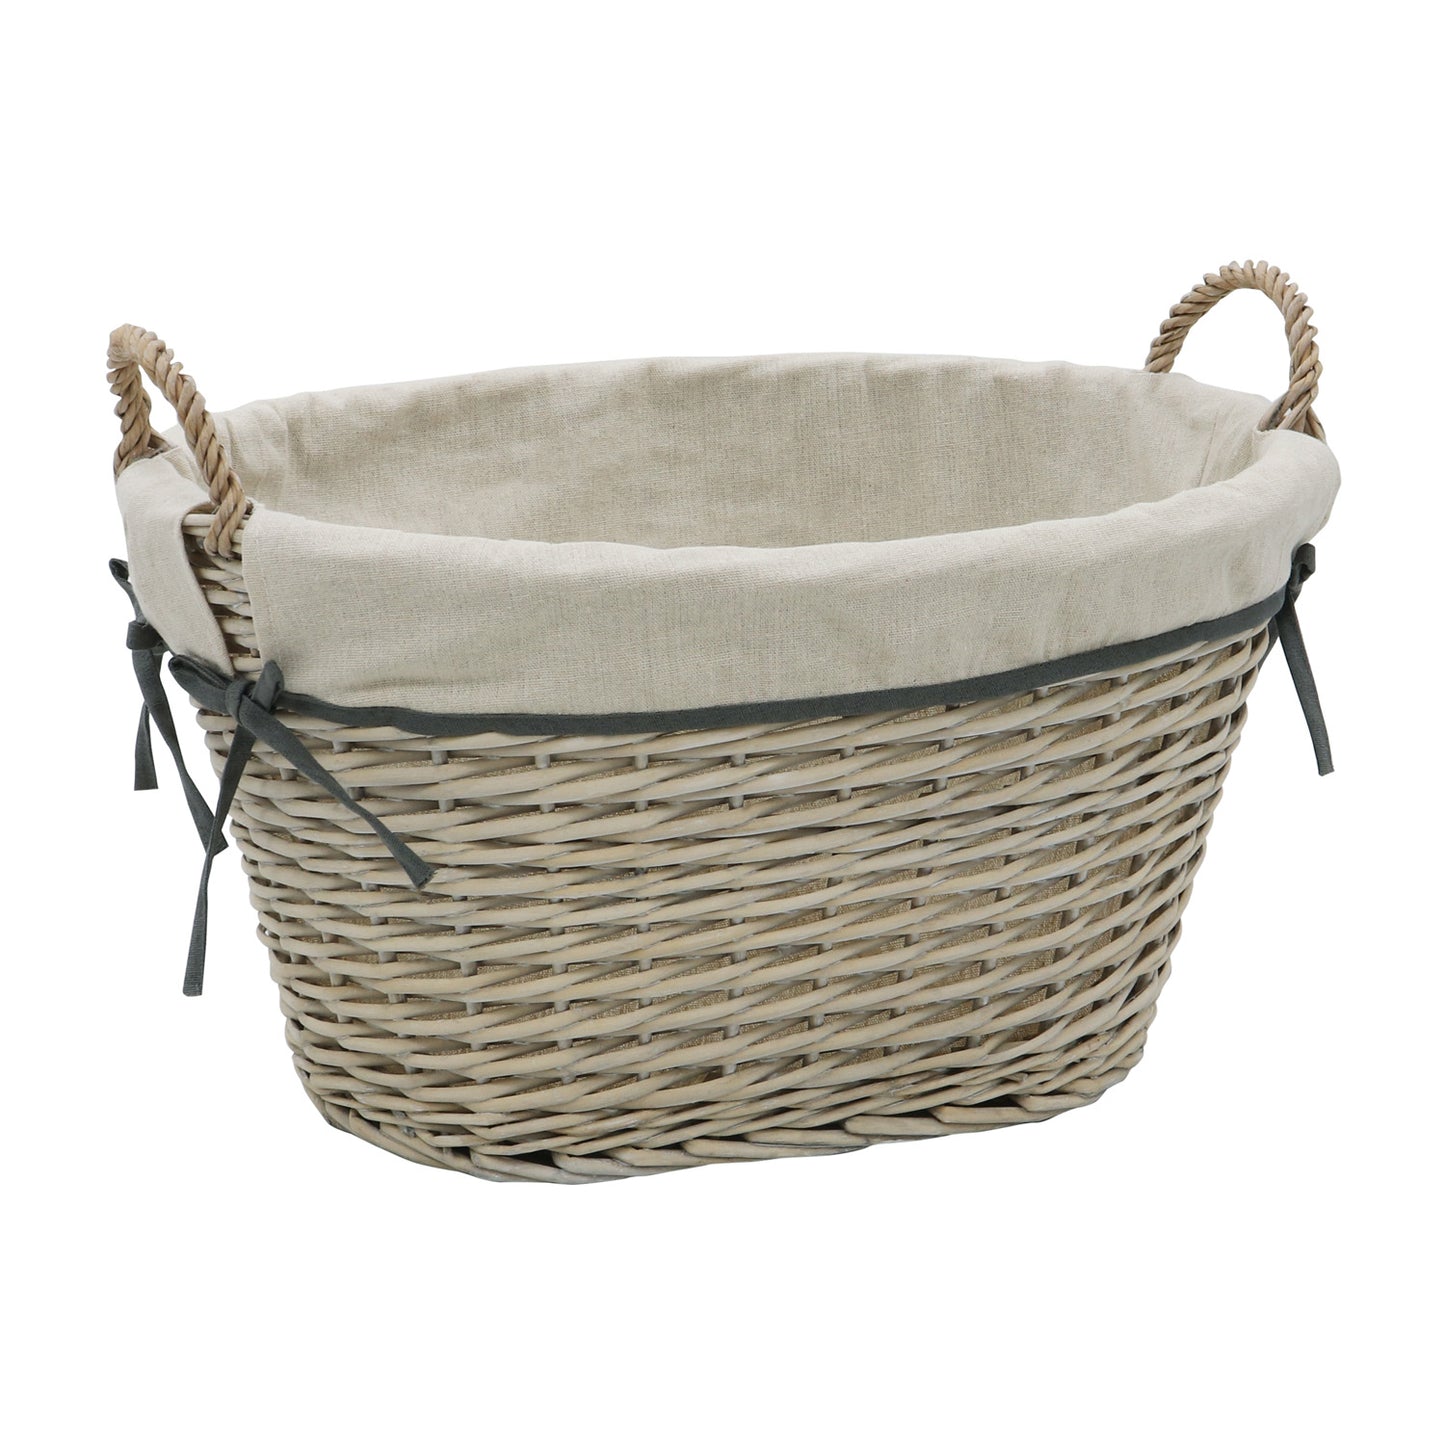 Arianna Antique Wash Oval Willow Storage Basket - Large